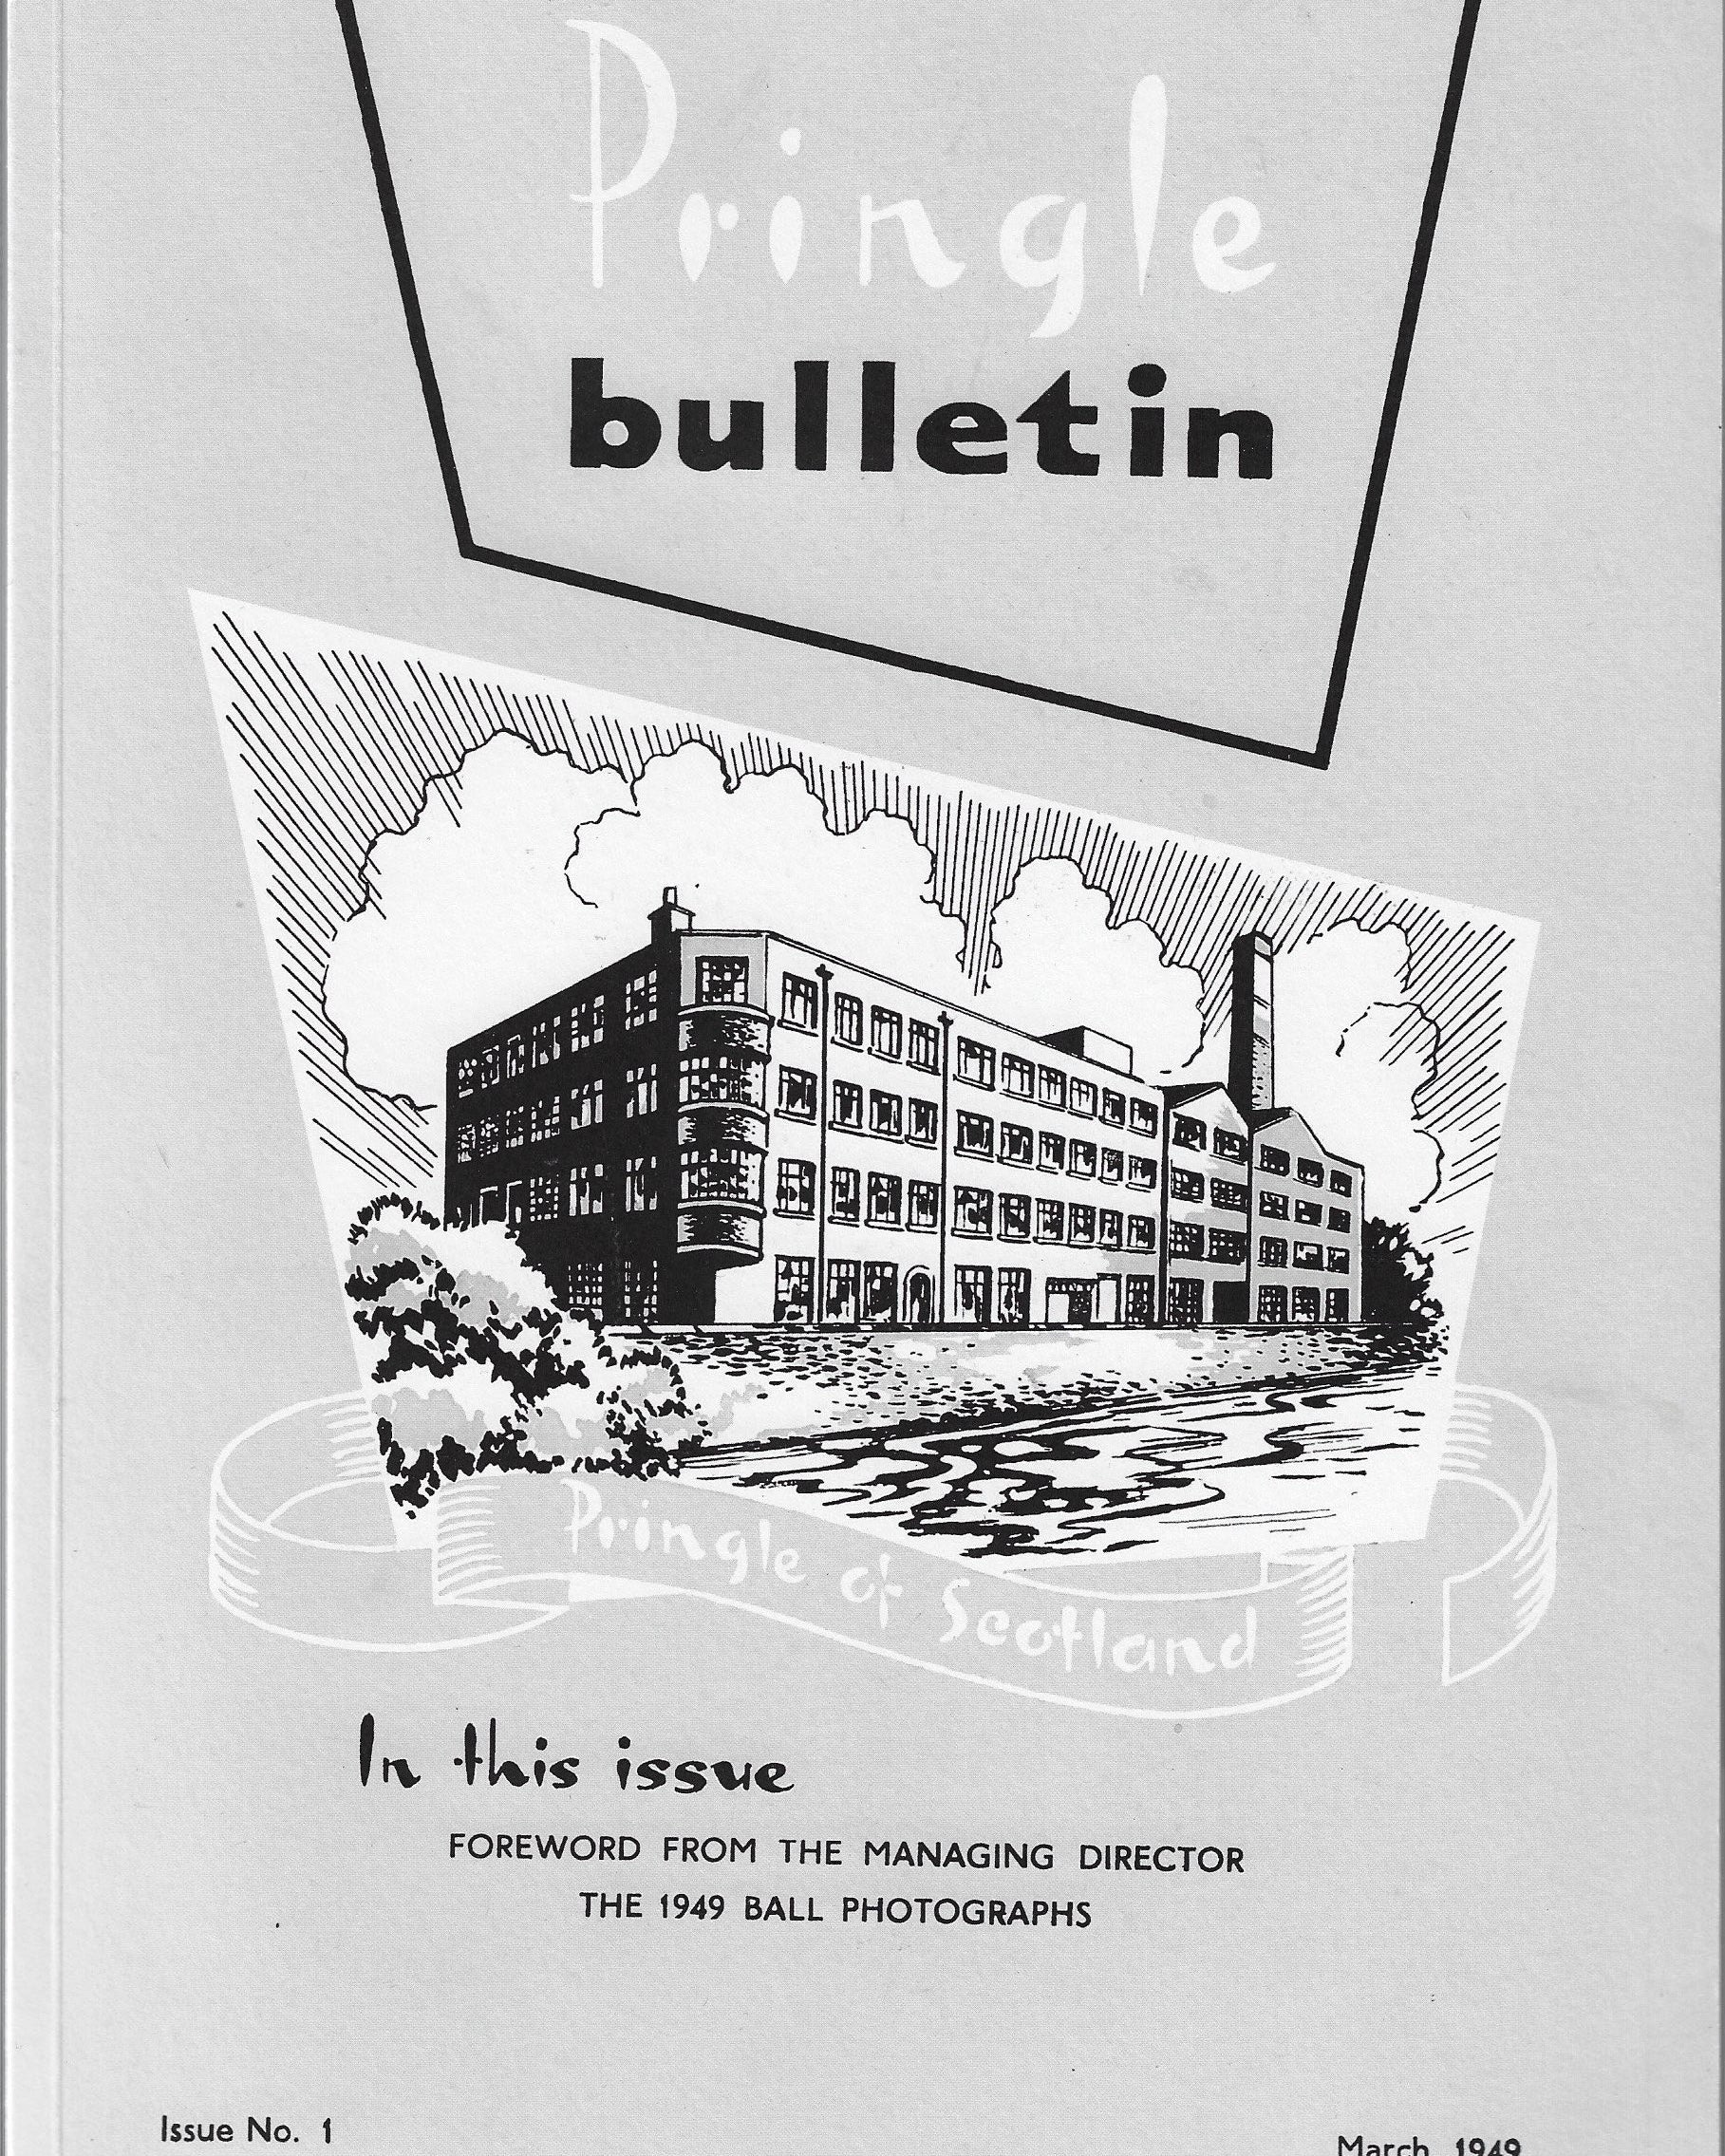 Pringle Bulletin Issue 1 - Harley Weir